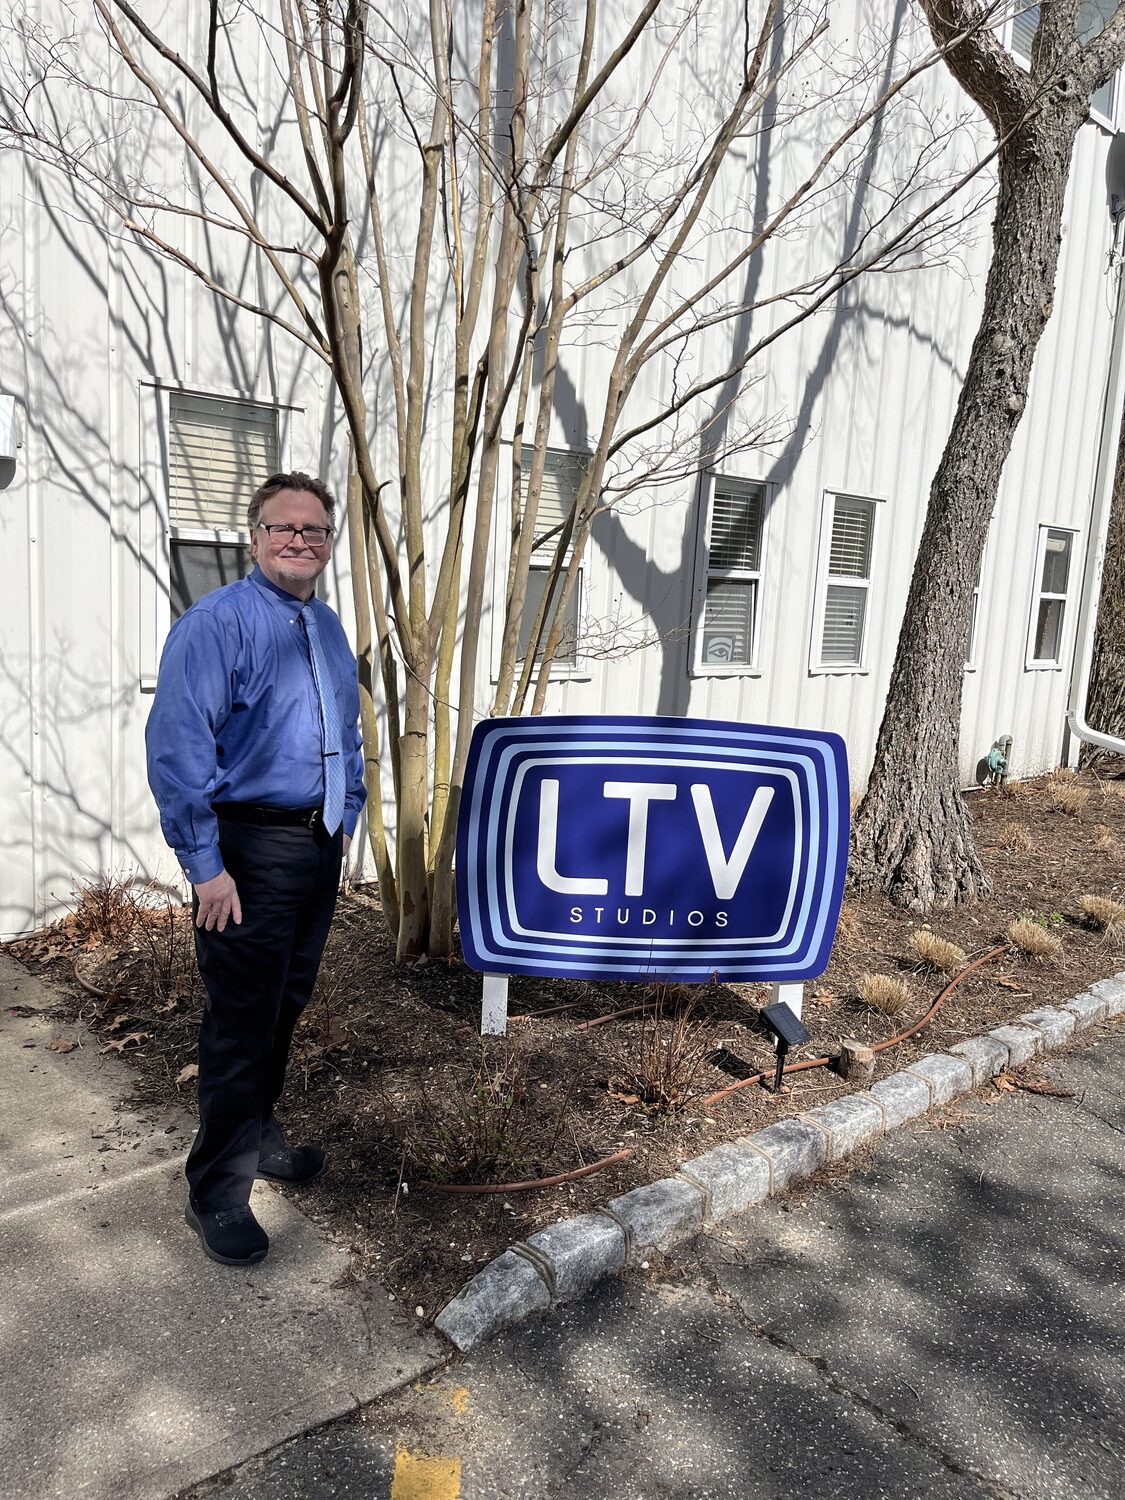 A Conversation With LTV Studios Executive Director Michael Clark